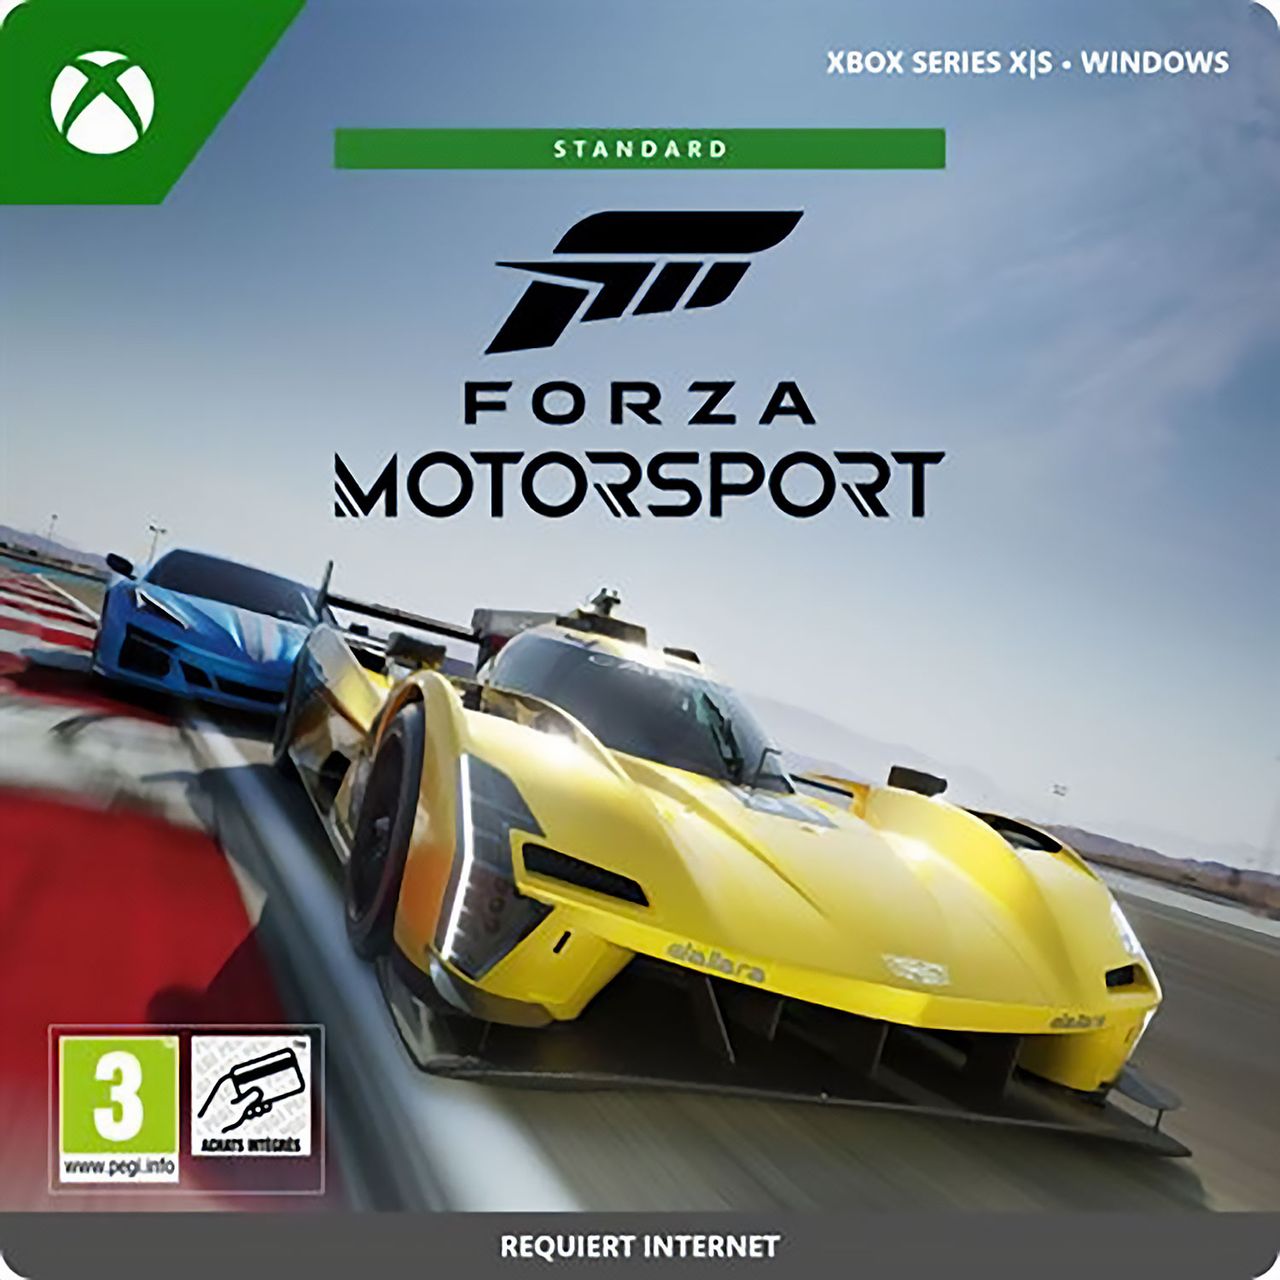 Forza Horizon Ultimate Ed. (4 and 3) Bundle PC/Xbox Live Key